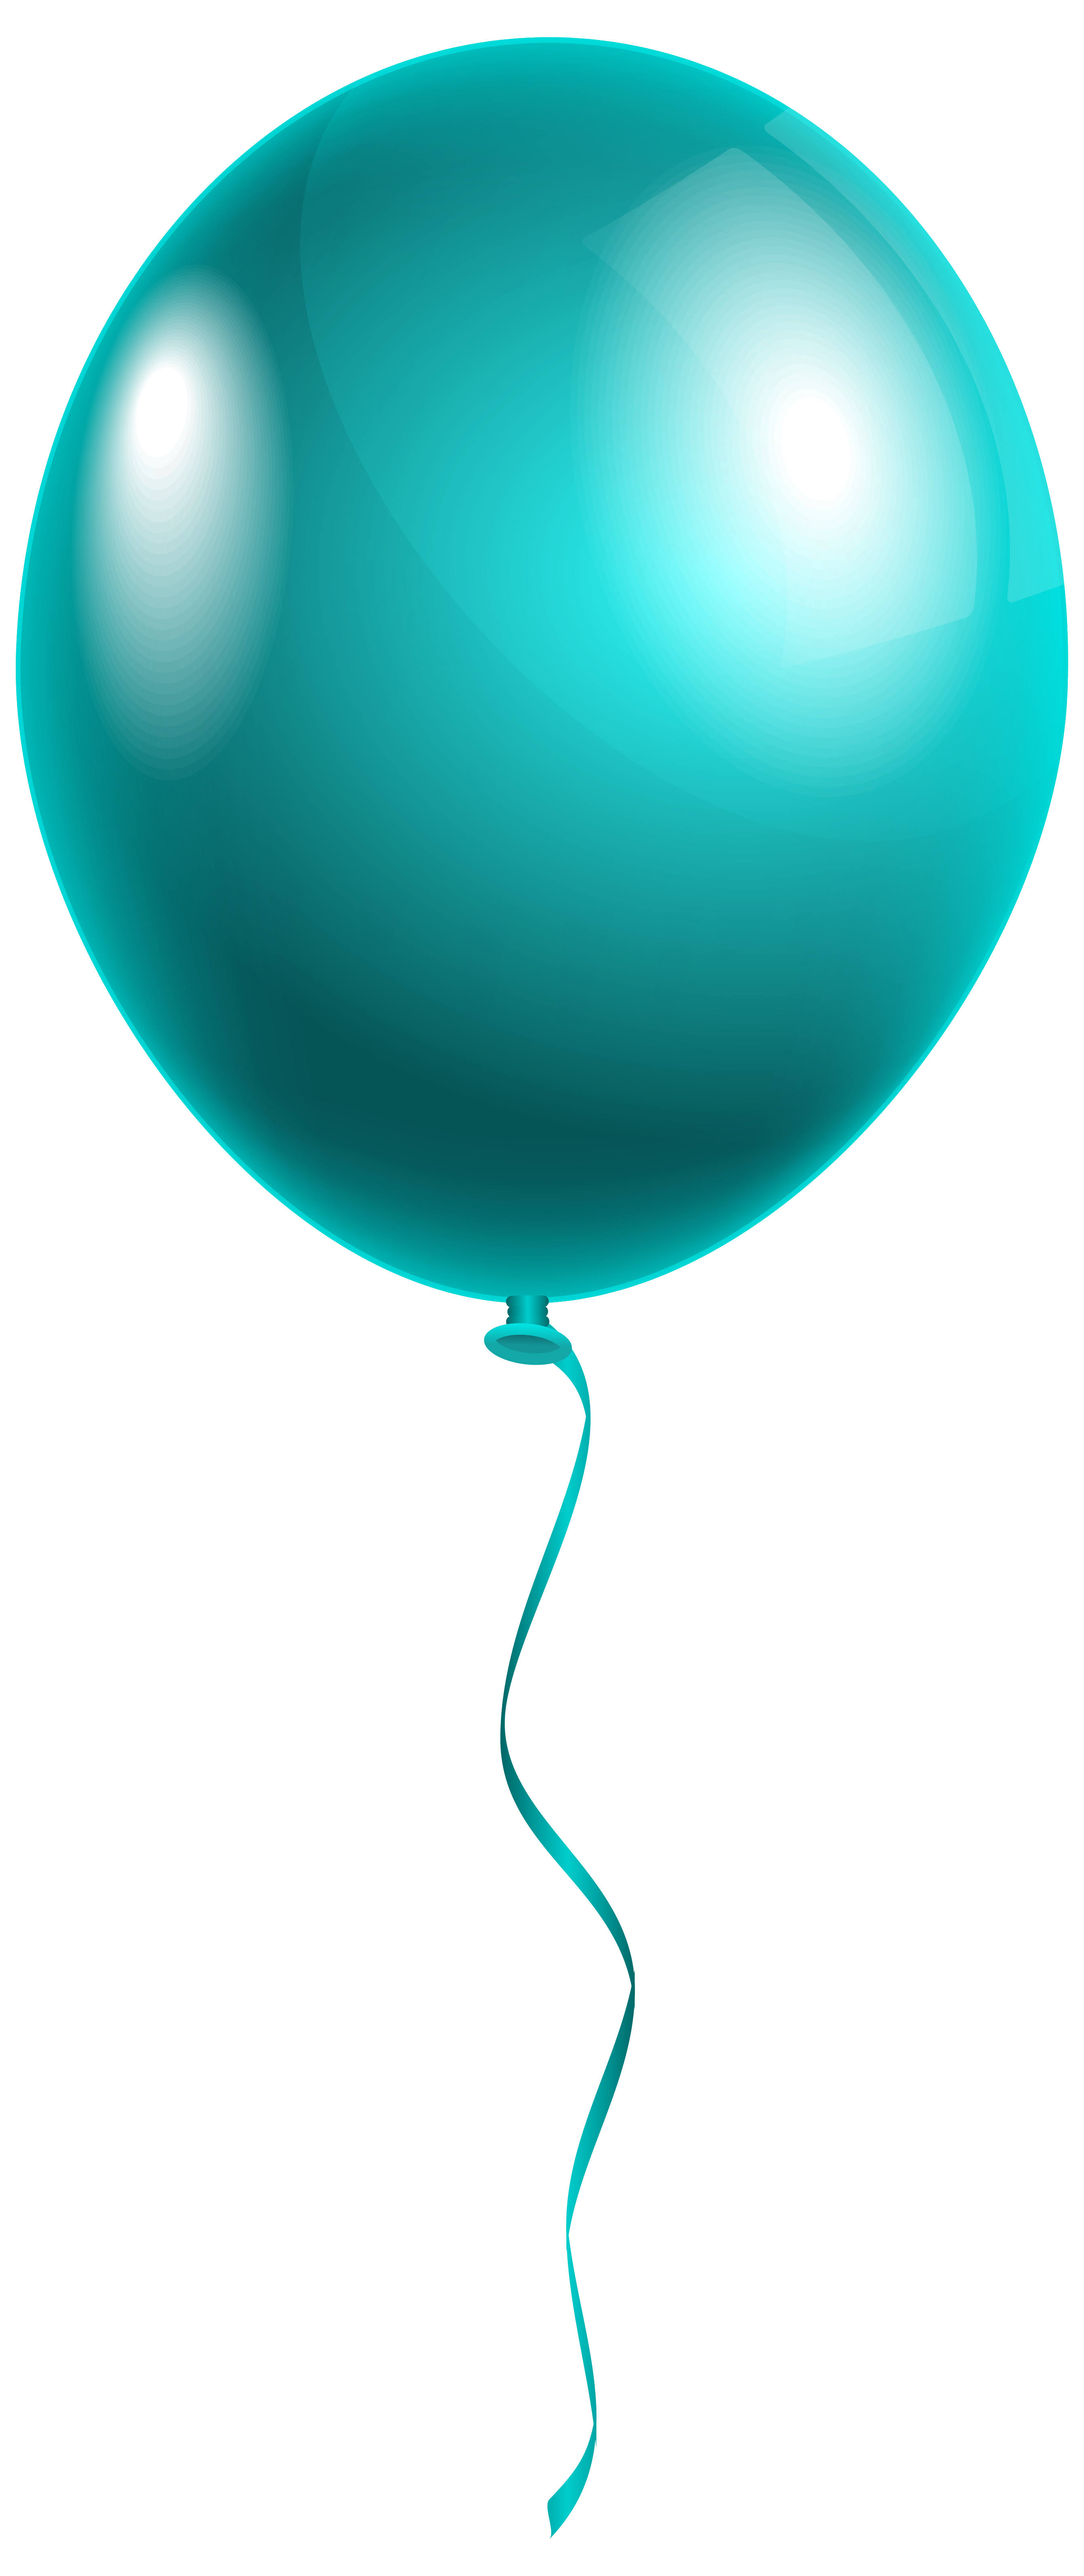 Single modern png image. Clipart balloon dark blue